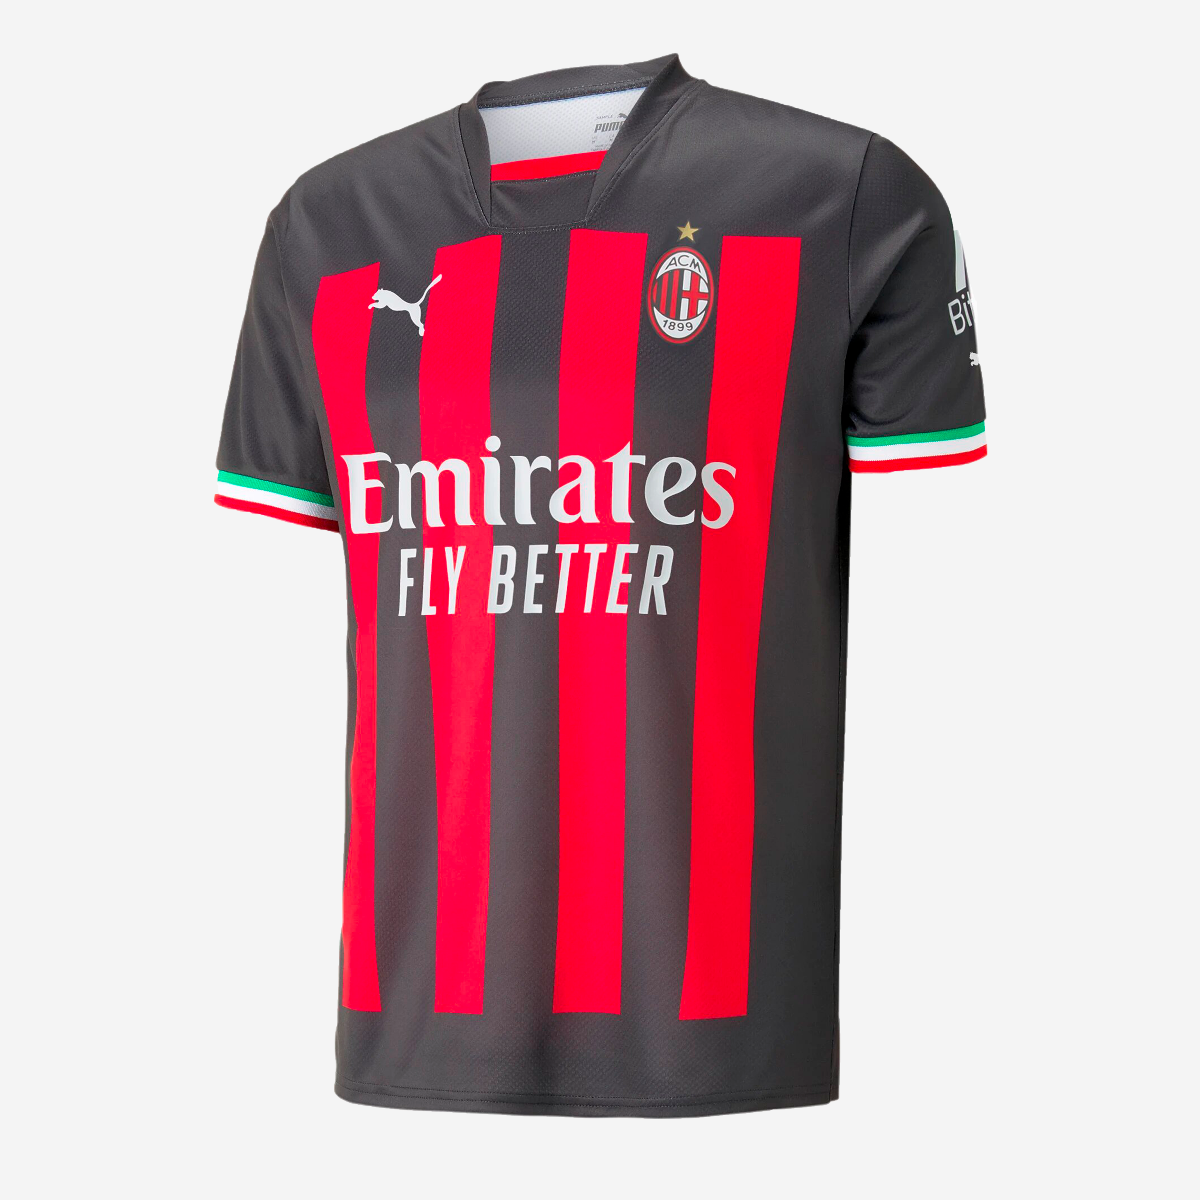 Camiseta Futbol AC Milan Edición Especial Roja Negra Versión